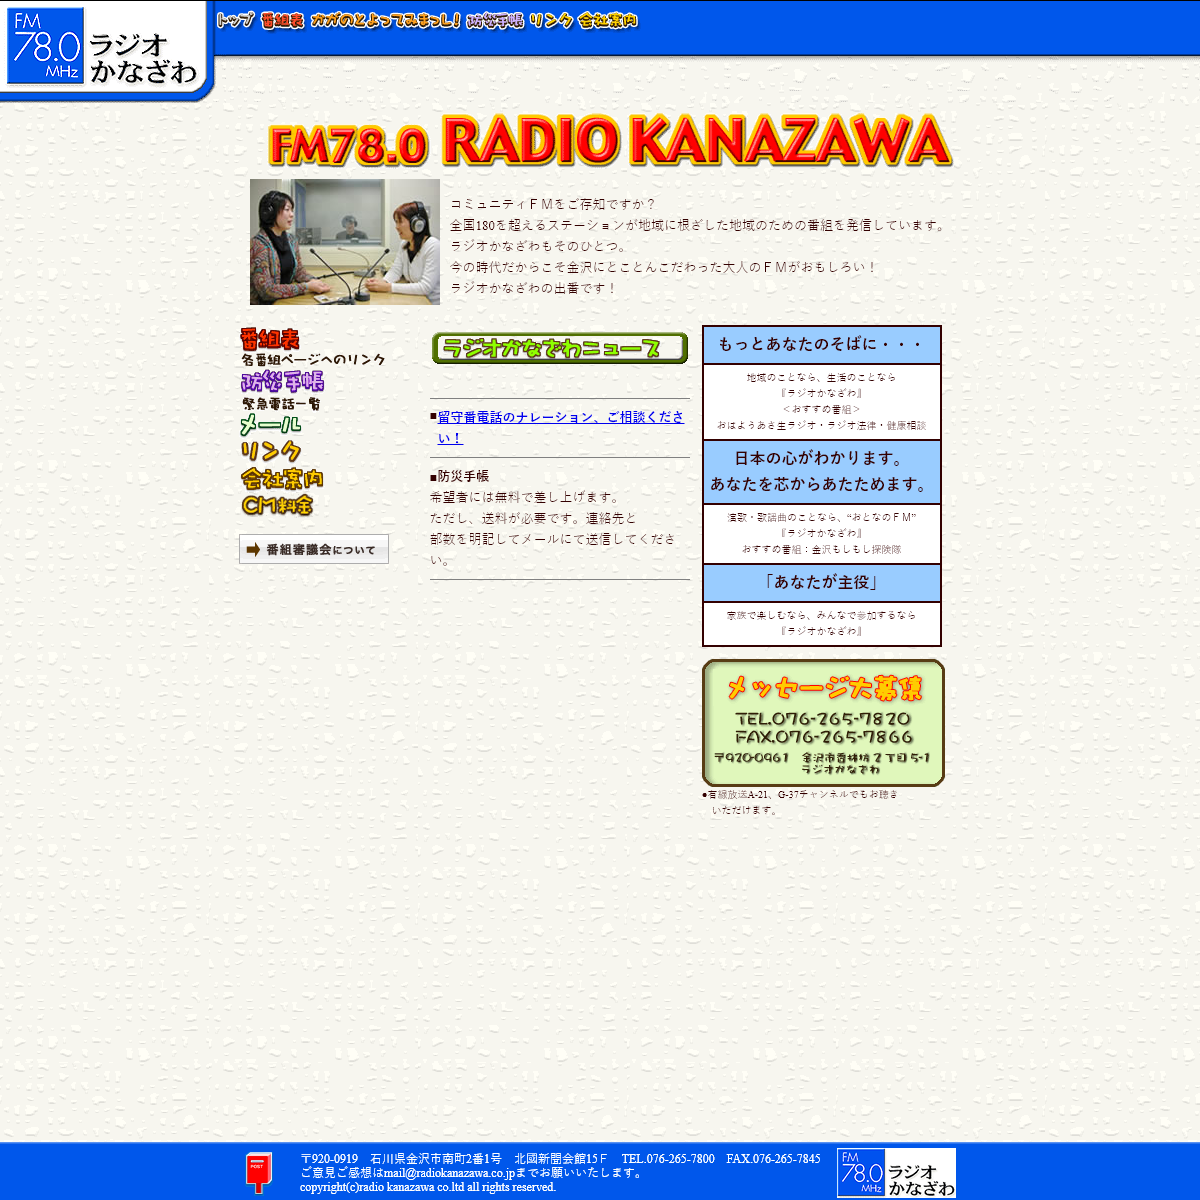 A complete backup of radiokanazawa.co.jp